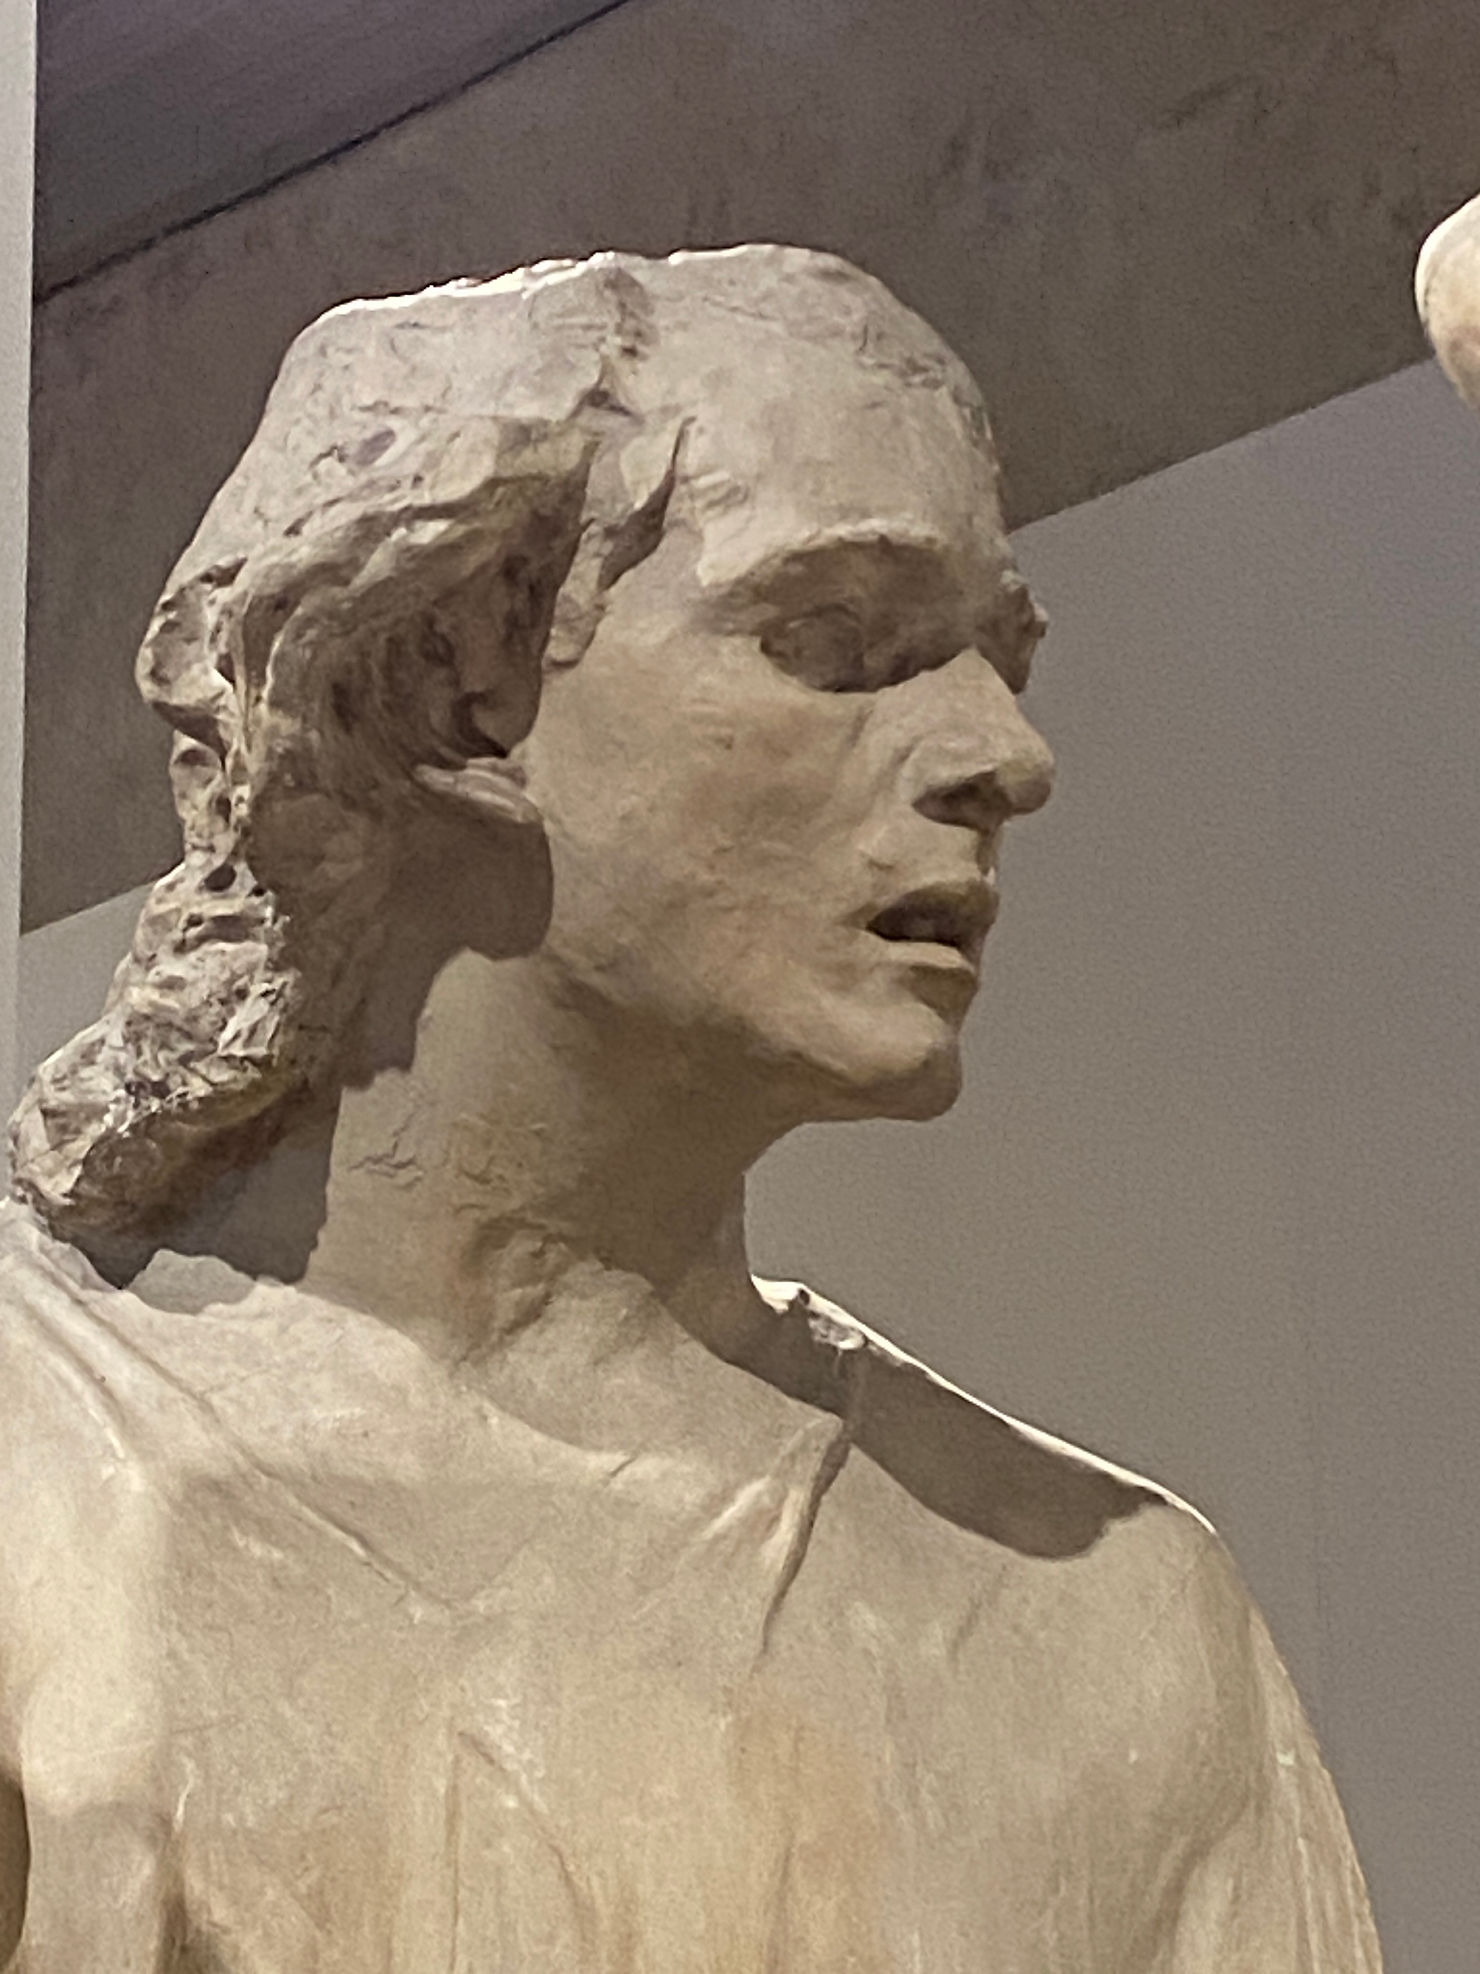 Auguste Rodin "I borghesi di Calais", 1889, gesso, cm 215x265x202. Acquisto alla Biennale, 1901. Galleria Internazionale d'Arte Moderna , Ca' Pesaro, Venezia.